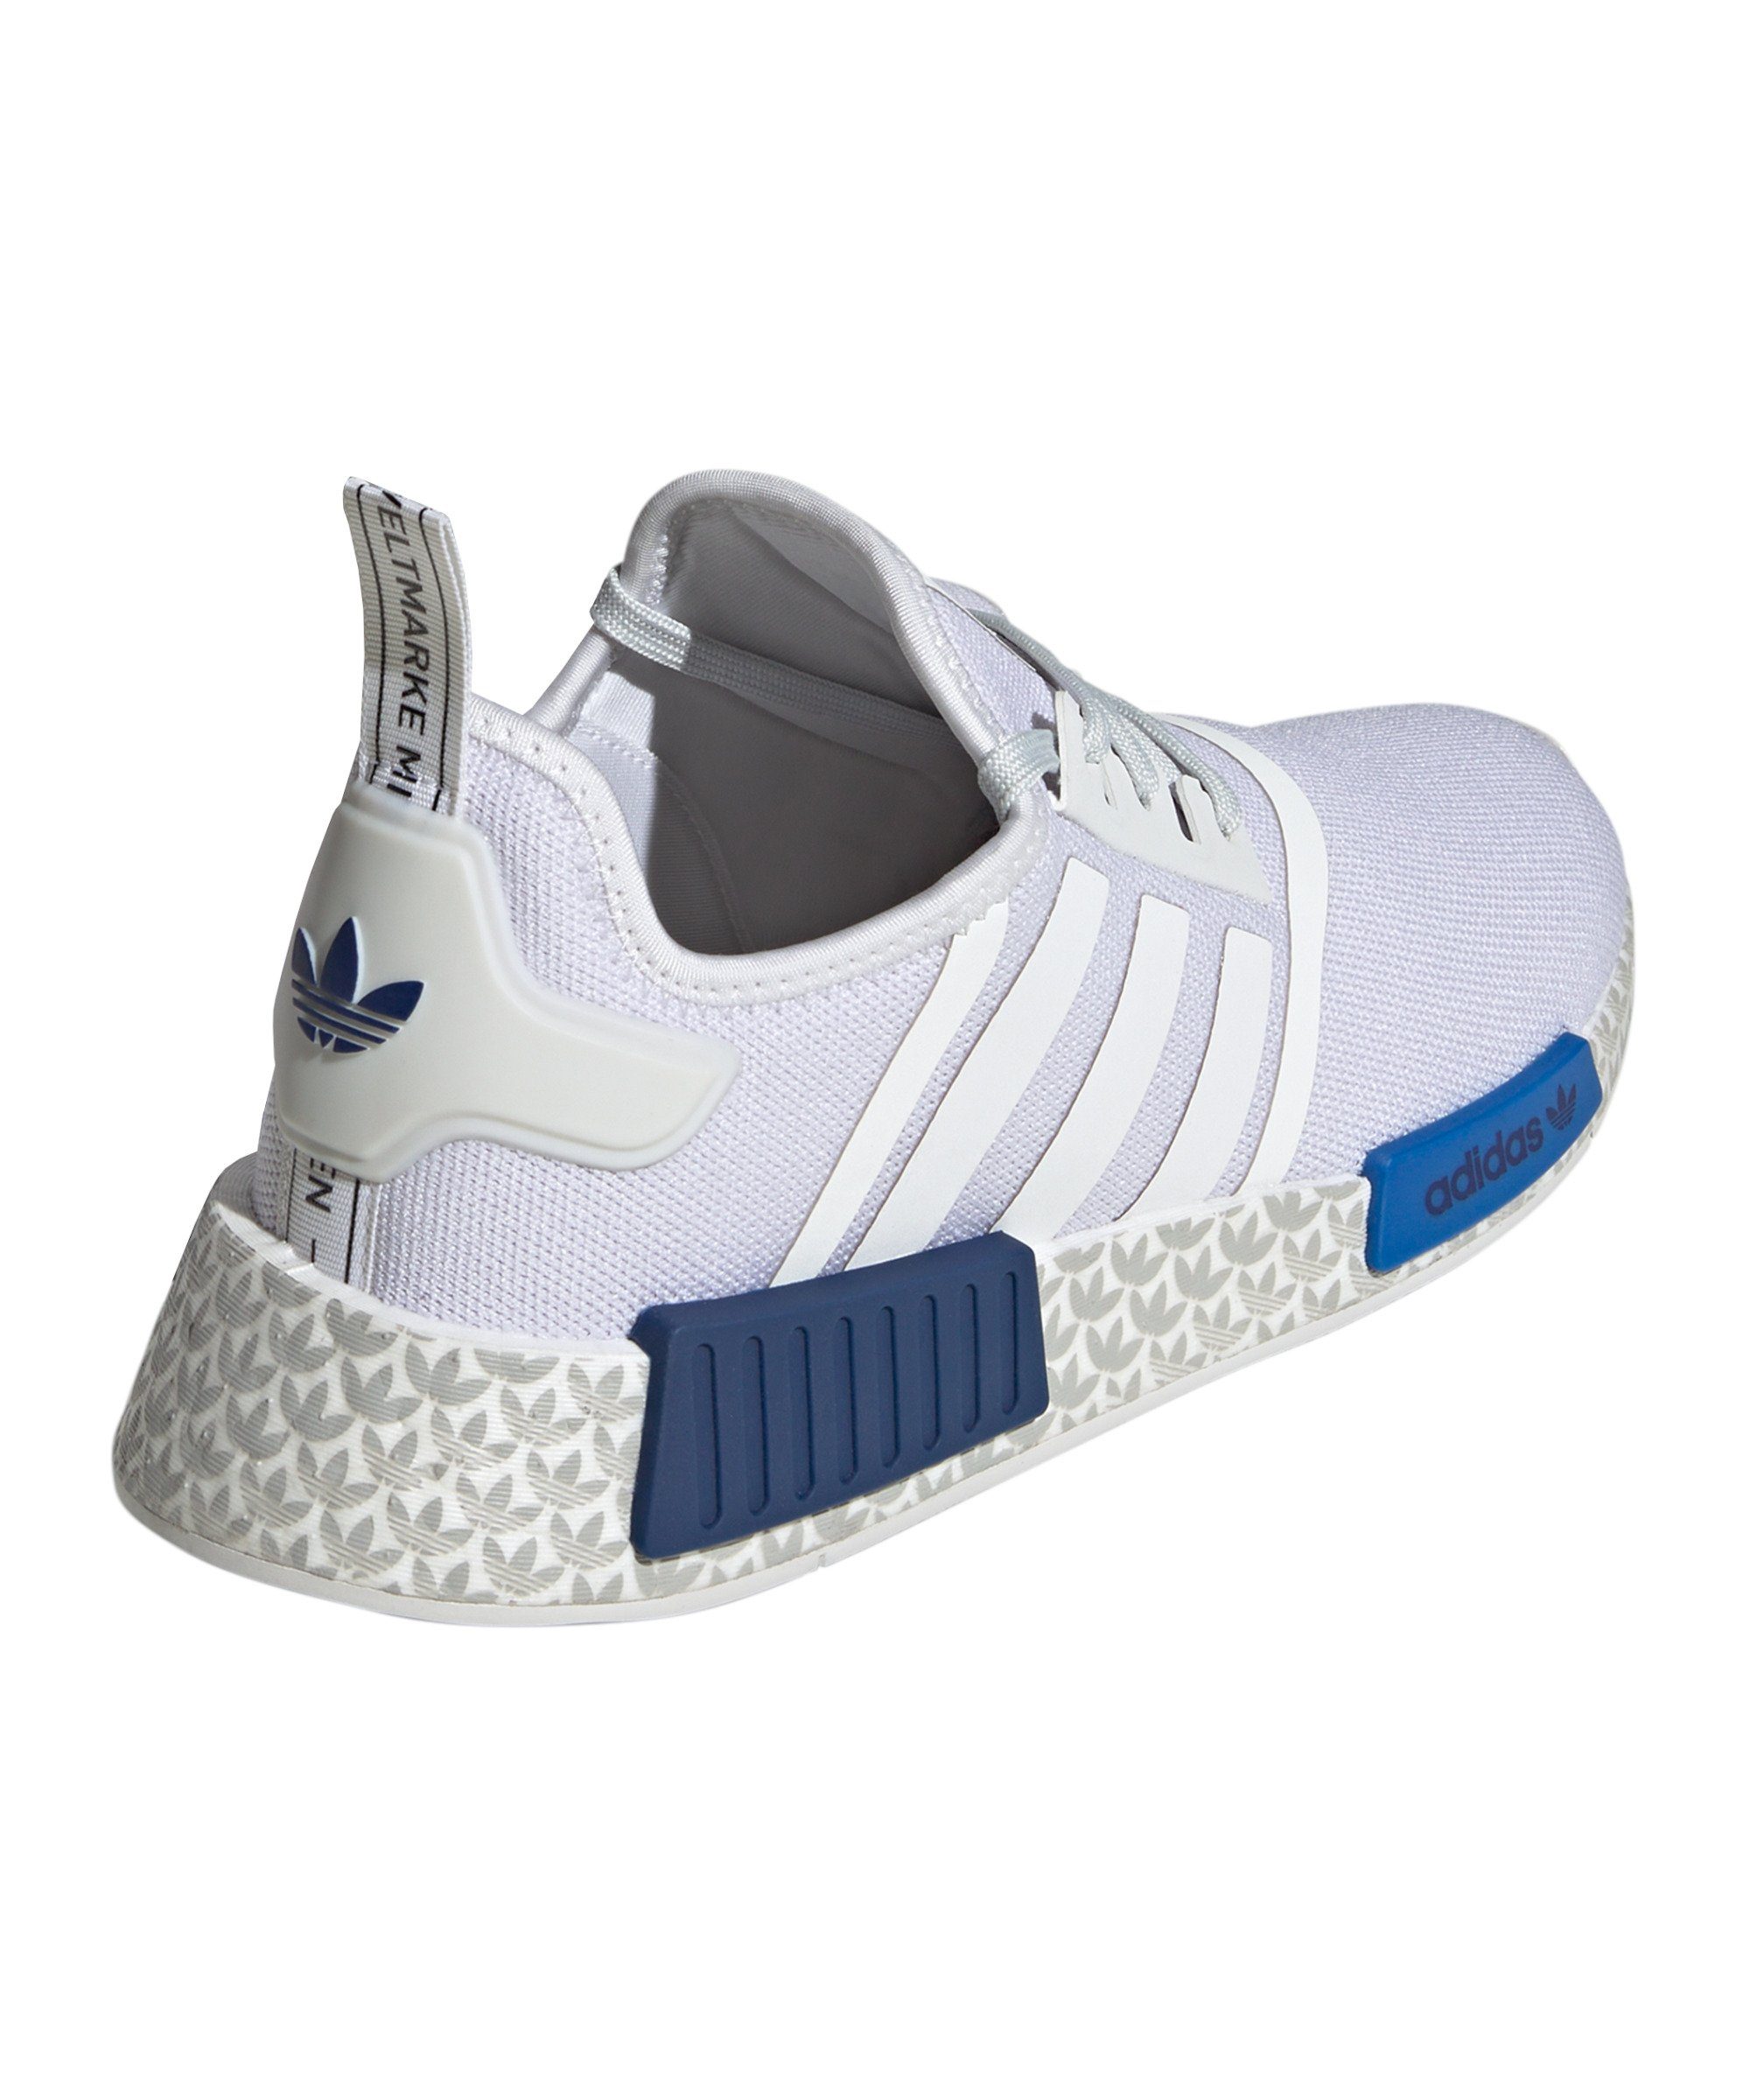 NMD_R1 Sneaker Originals weissweissblau adidas